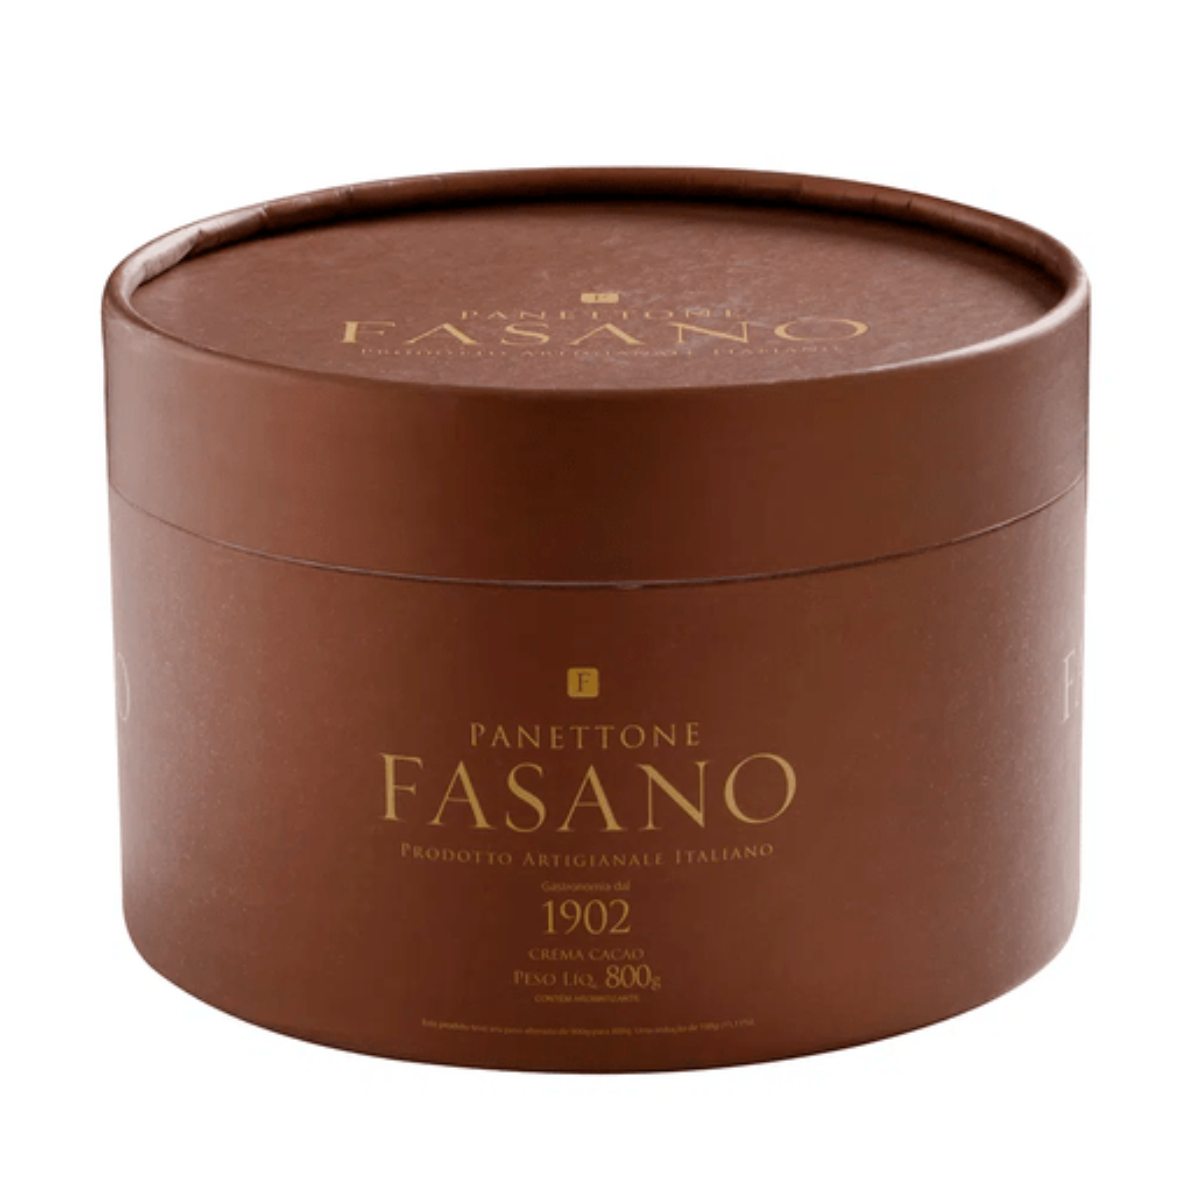 Panetone Italiano Fasano, Chocolate Crema Cacao, 800g